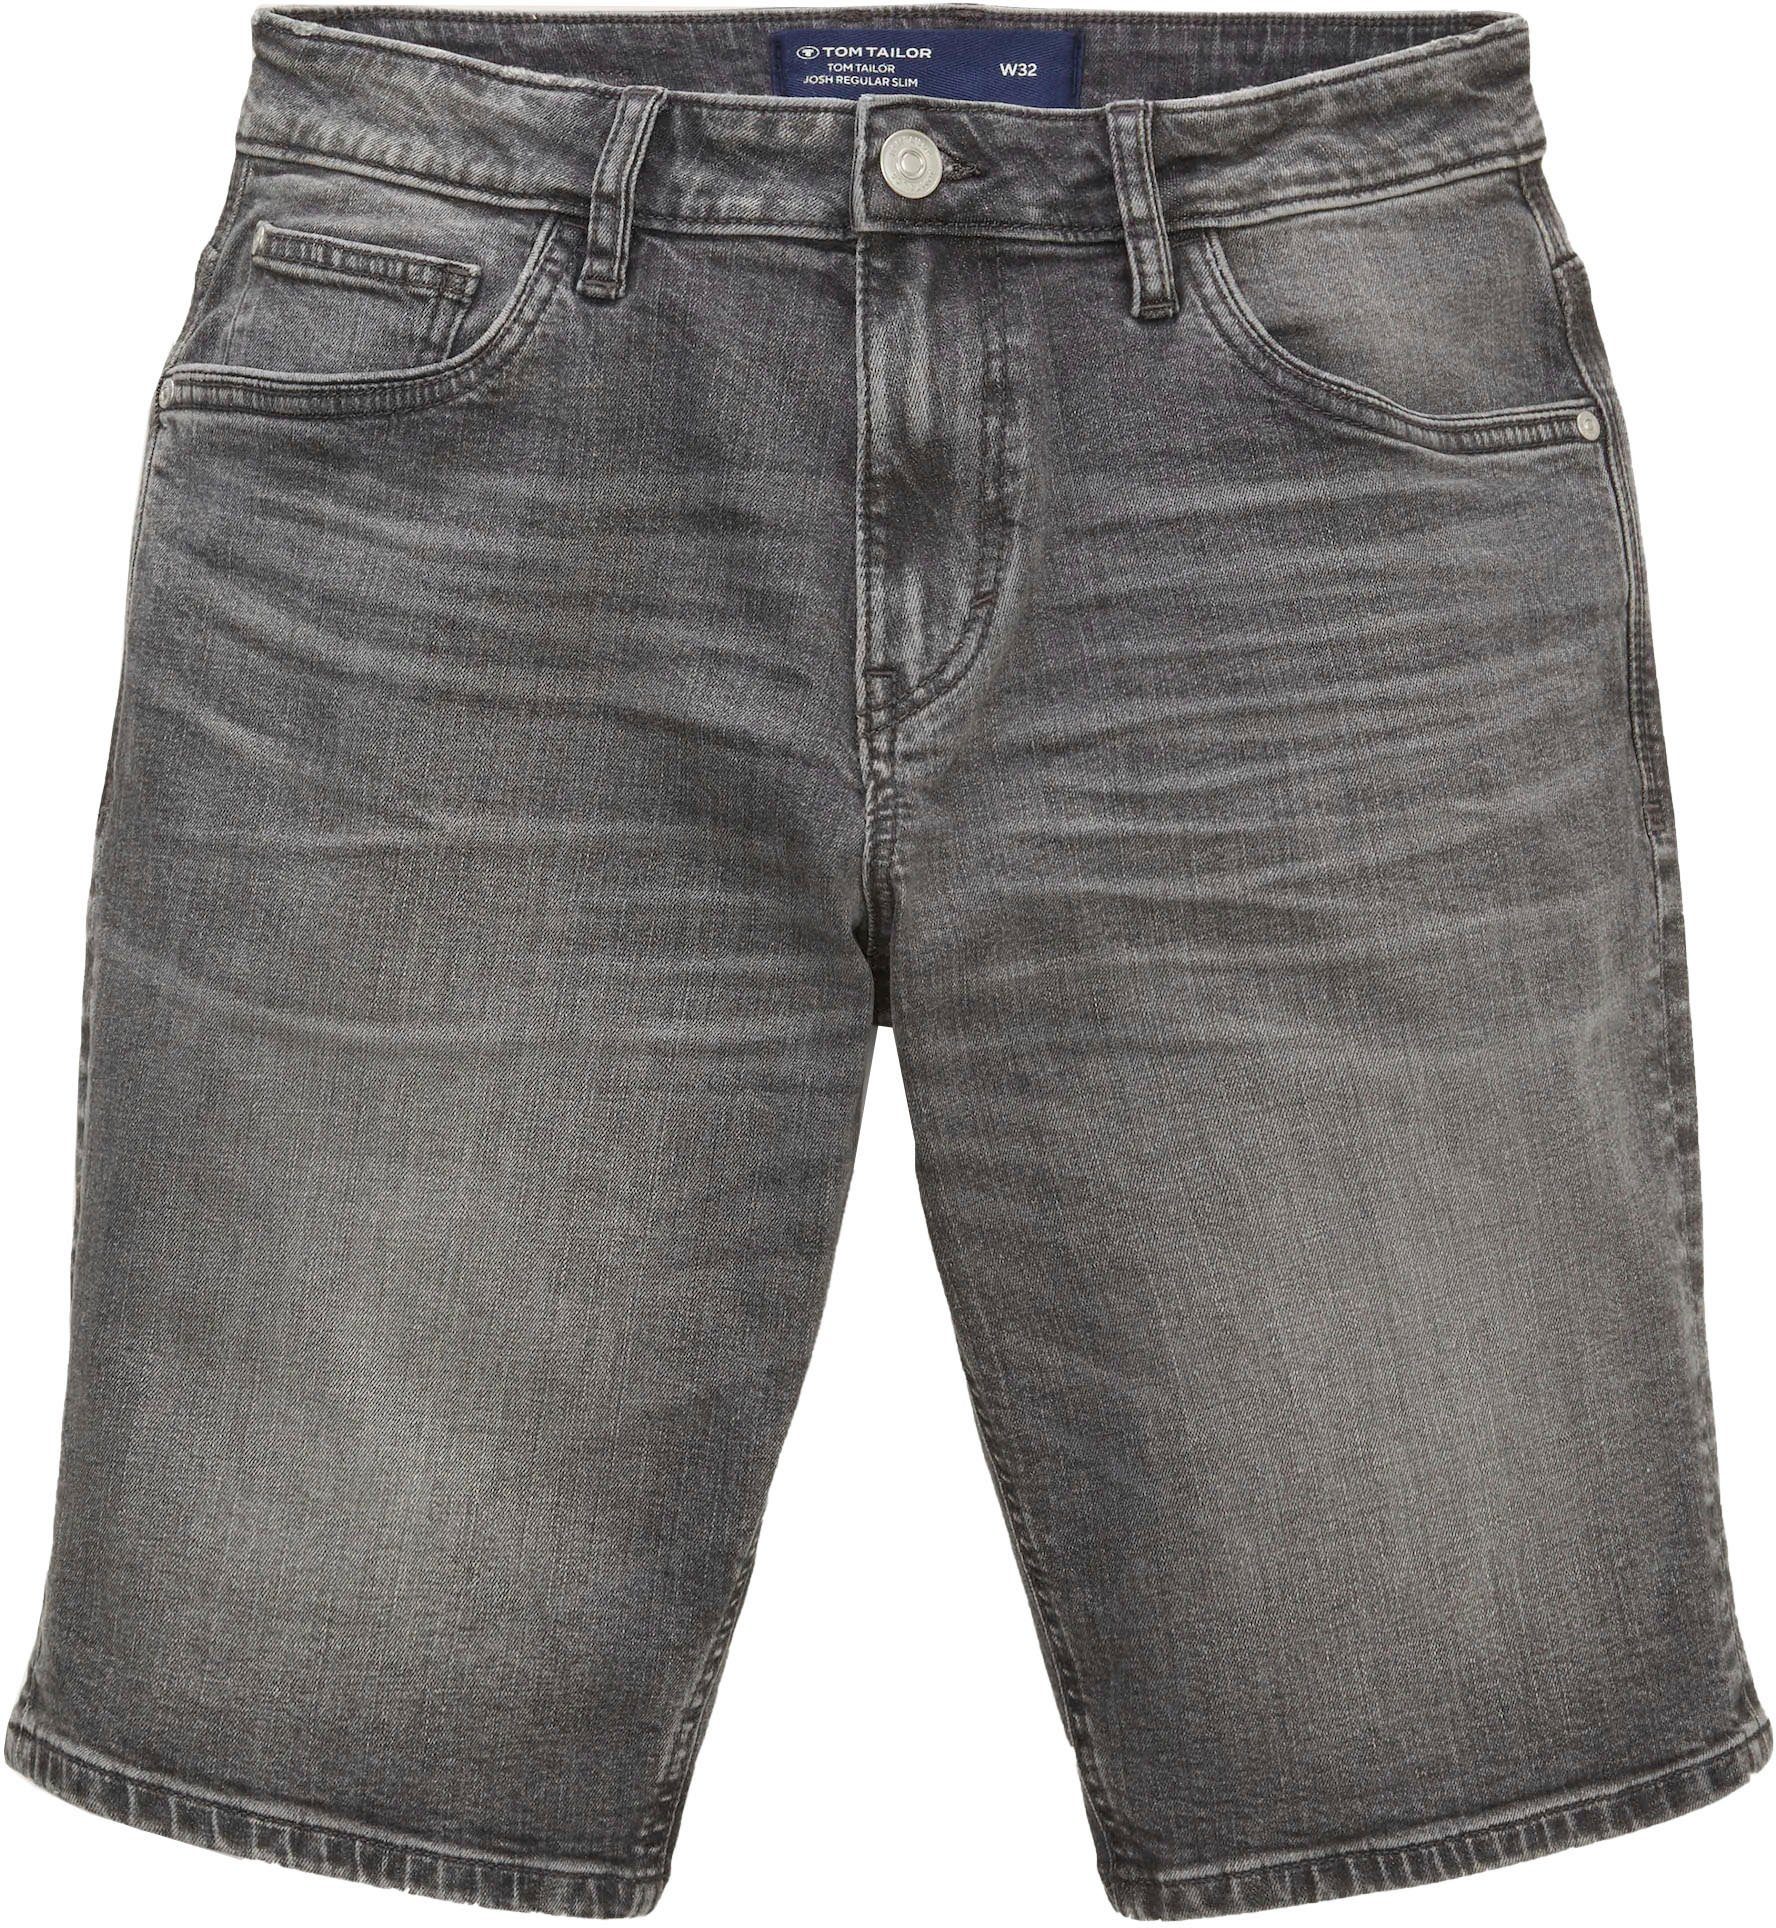 TOM TAILOR mid used stone 5-Pocket-Jeans